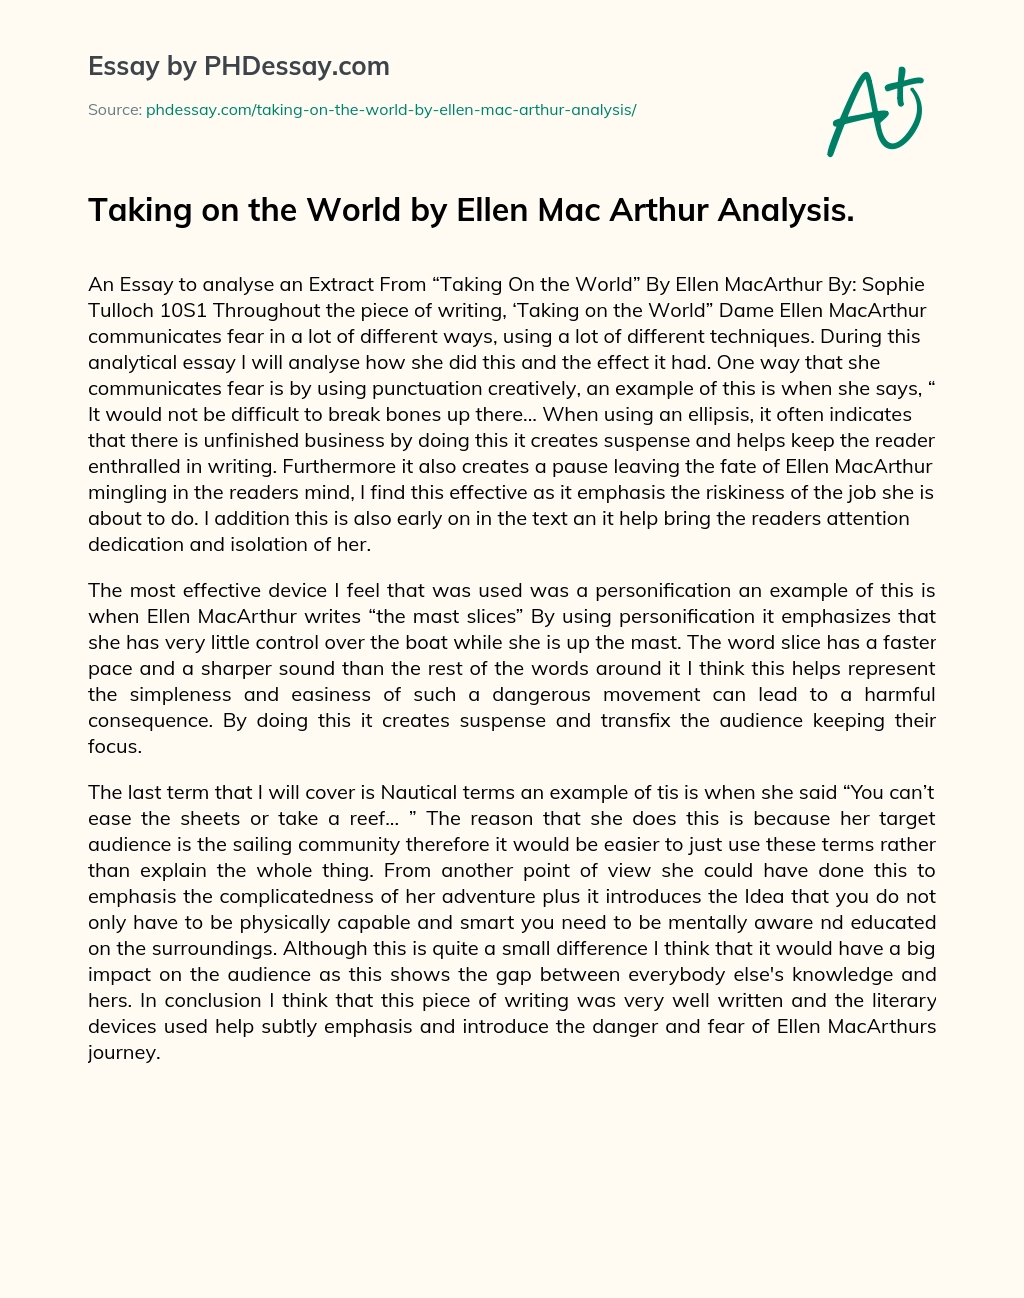 Taking on the World by Ellen Mac Arthur Analysis. essay